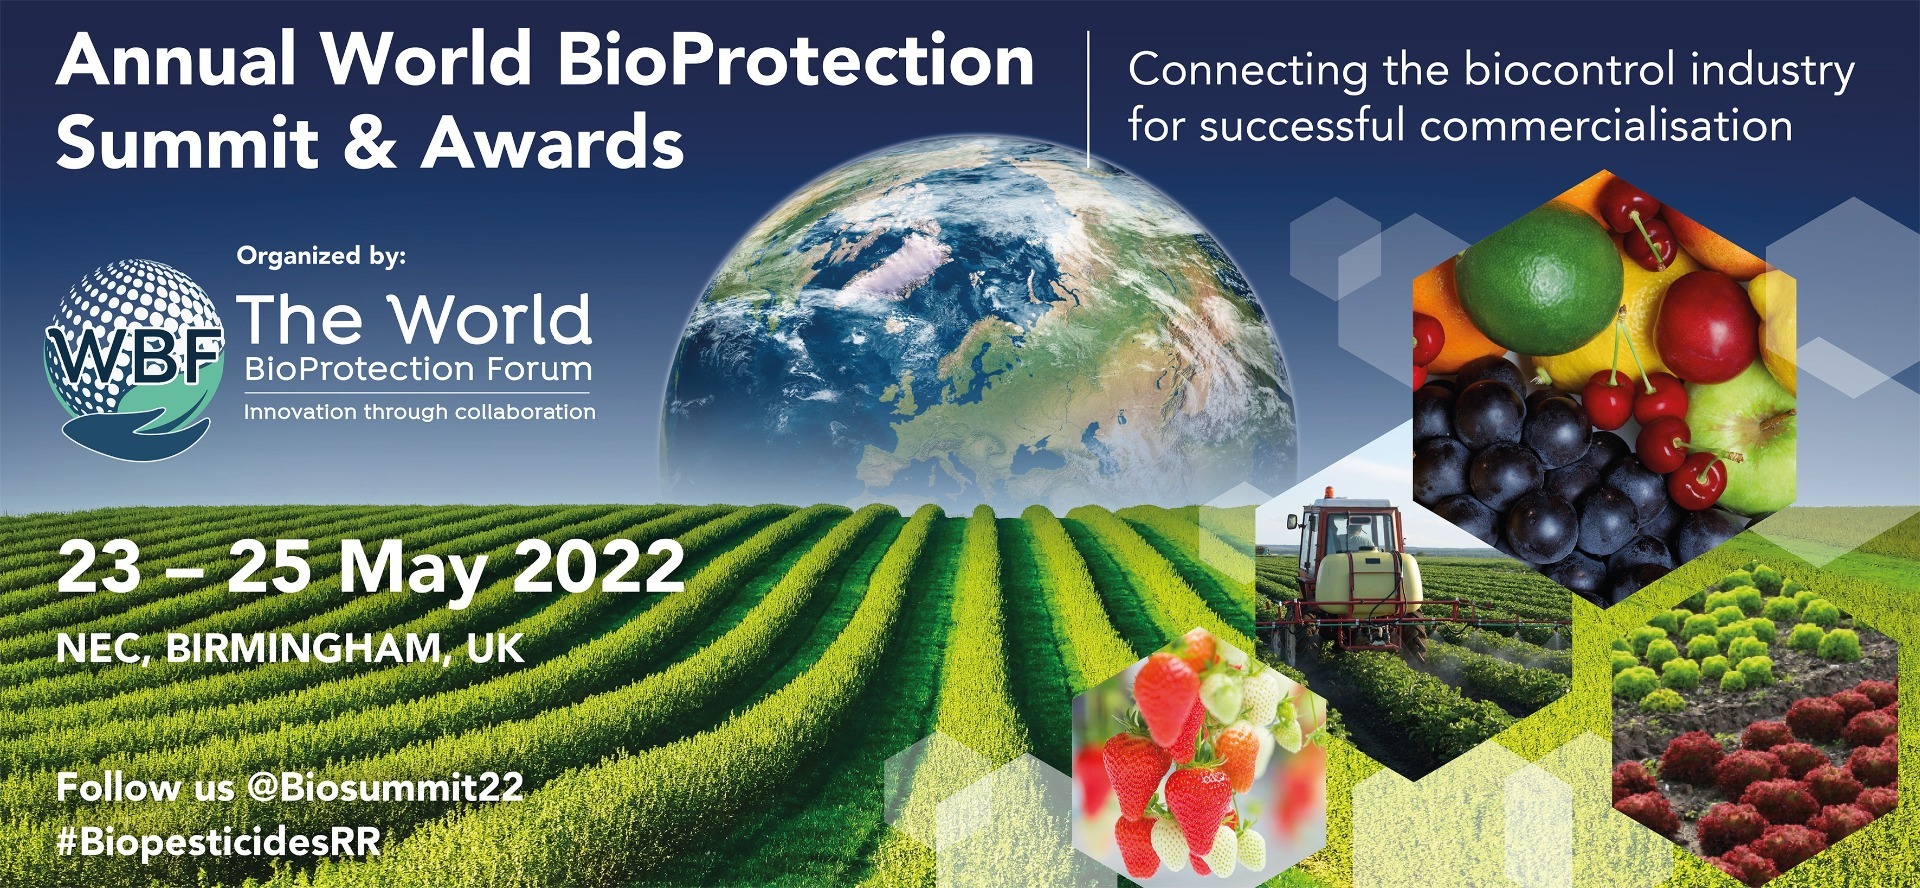 Annual World BioProtection Summit & Awards